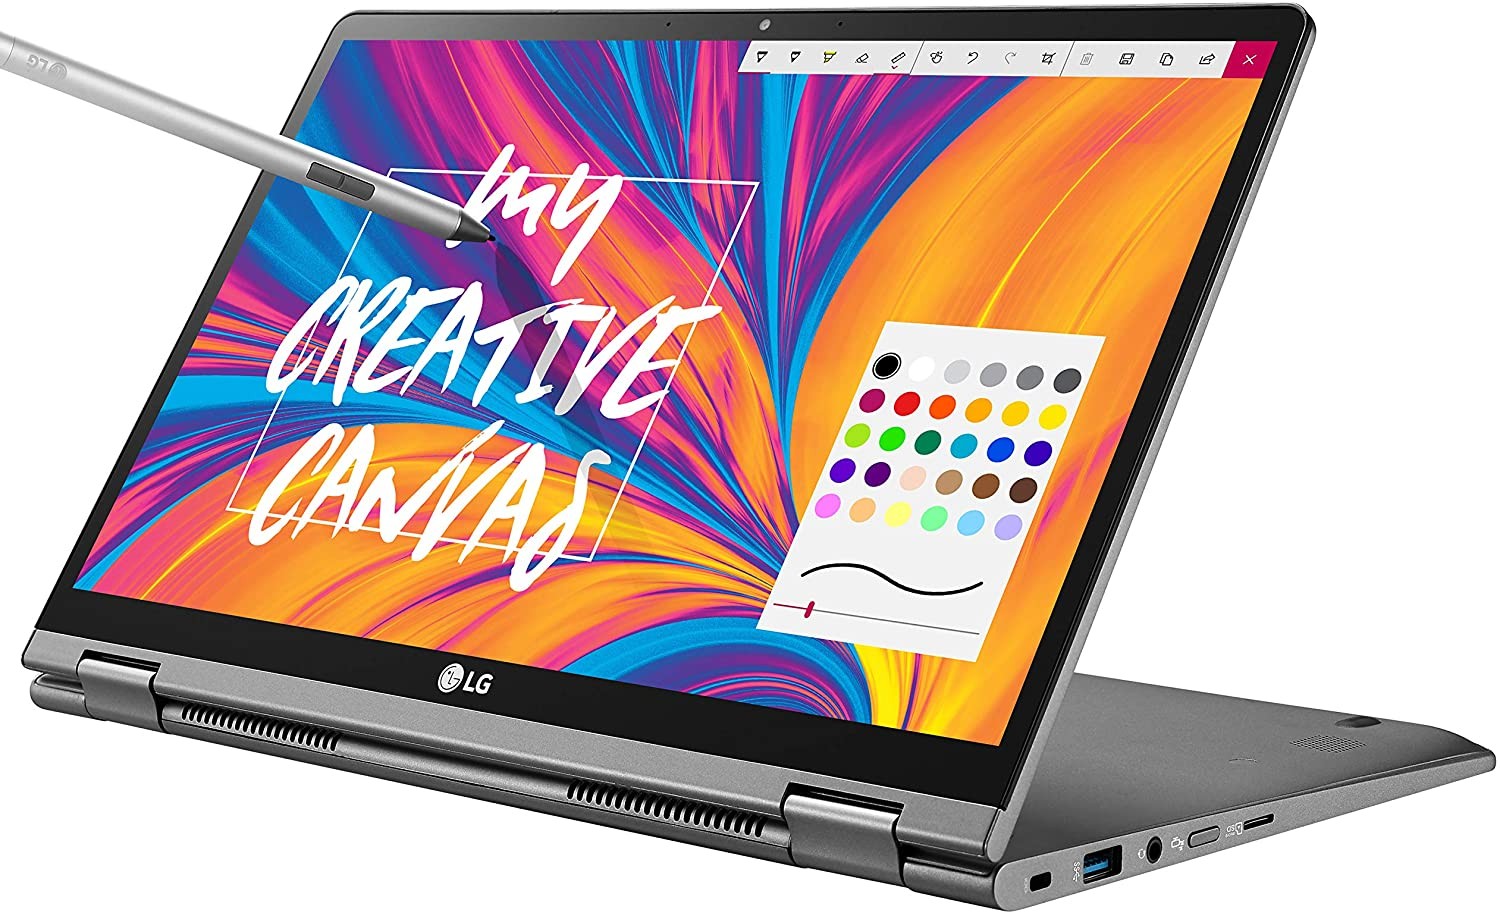 LG Gram 14" FHD Touch i7-8565U 1.8GHz 16GB 512GB SSD W10H 2in1 Laptop +Wacom Pen